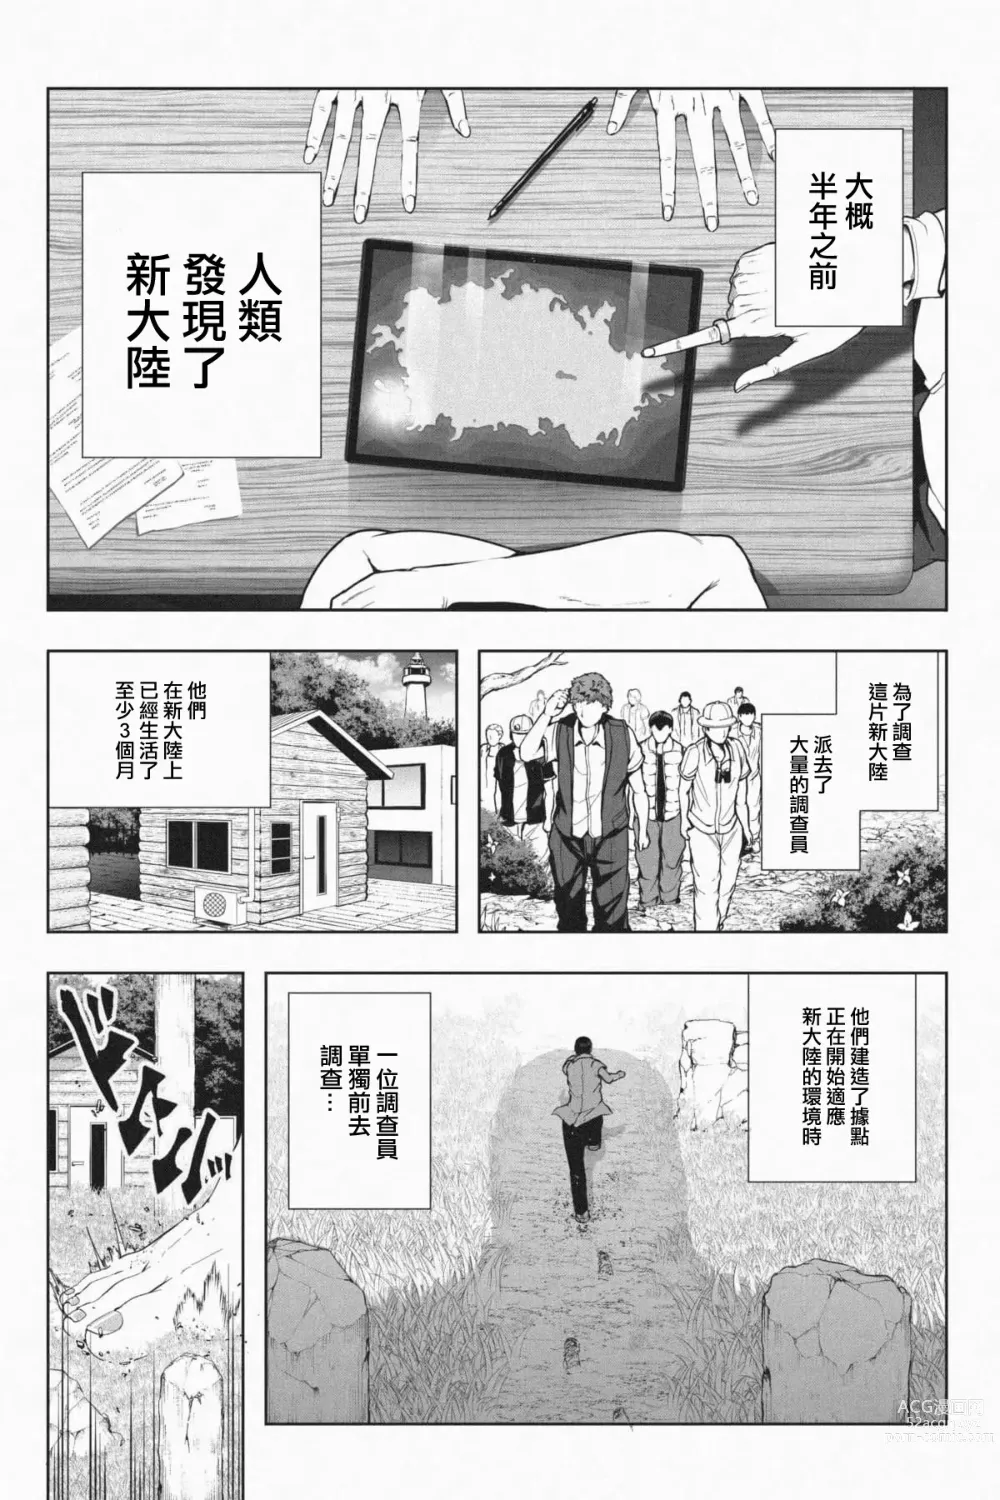 Page 3 of doujinshi 歡迎來到巨人島